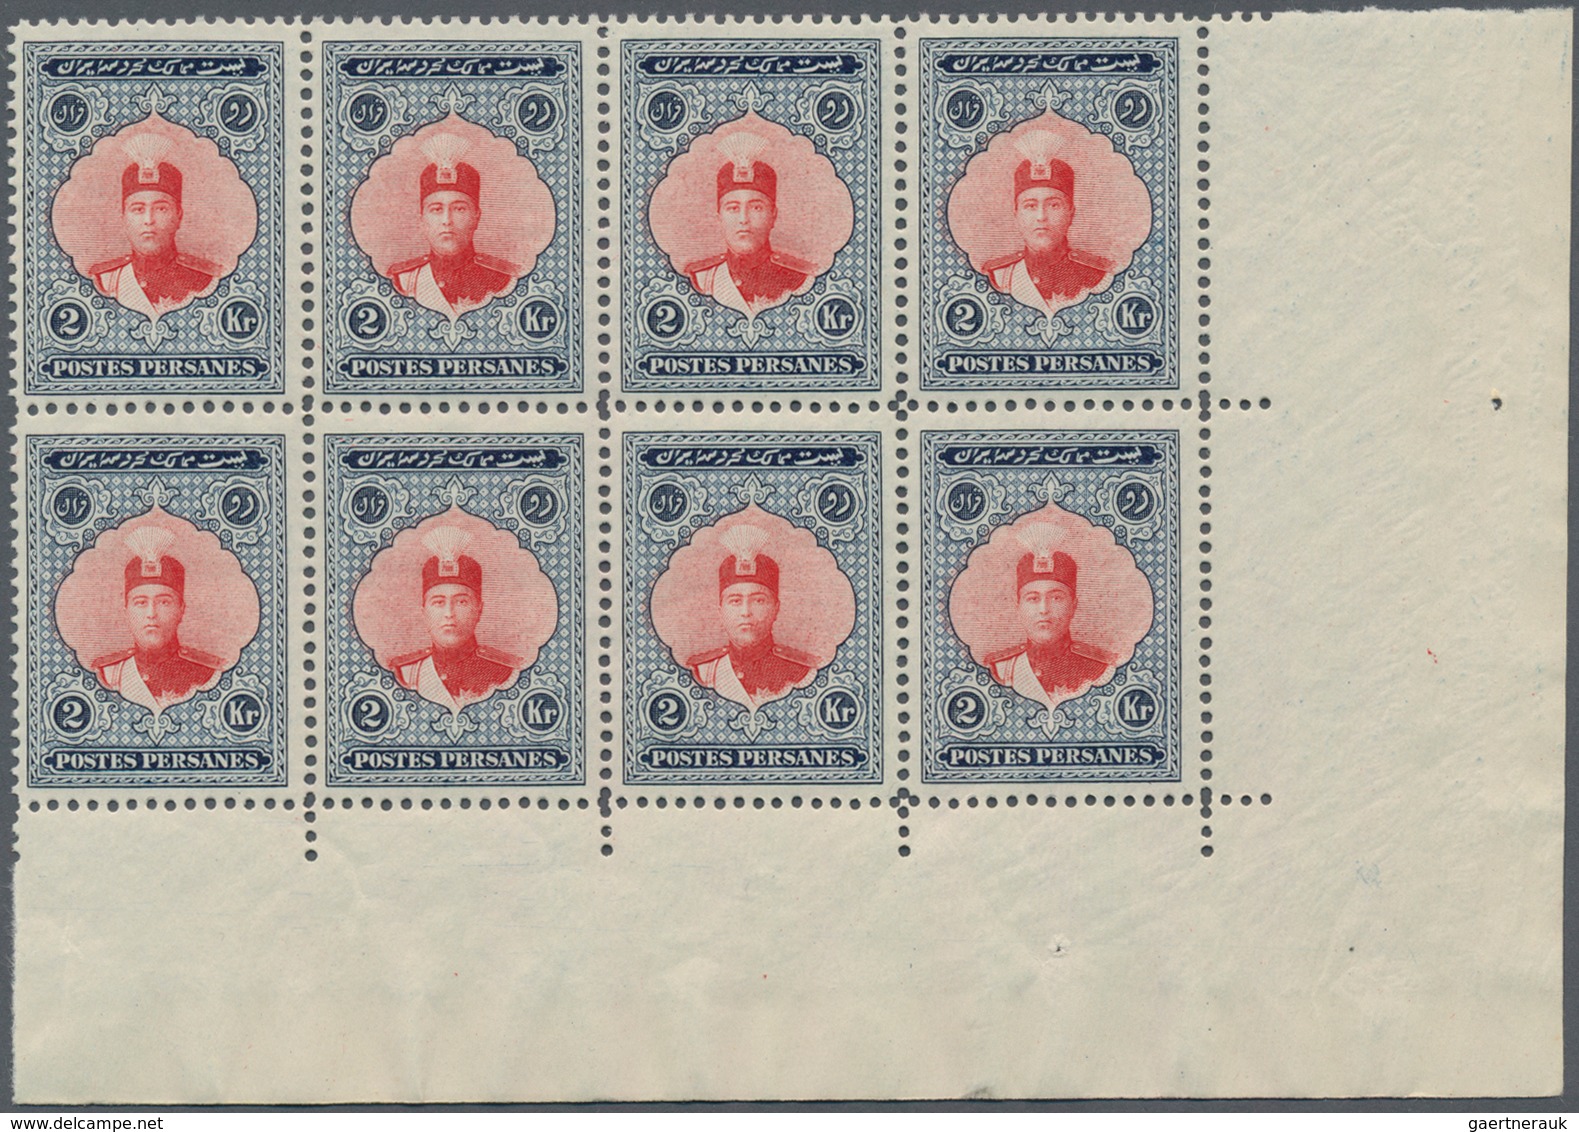 Iran: 1924/1925, Definitives Ahmad Shah Qajar, 1ch., 6ch., 9ch. and 1kr.-30kr., ten values in margin